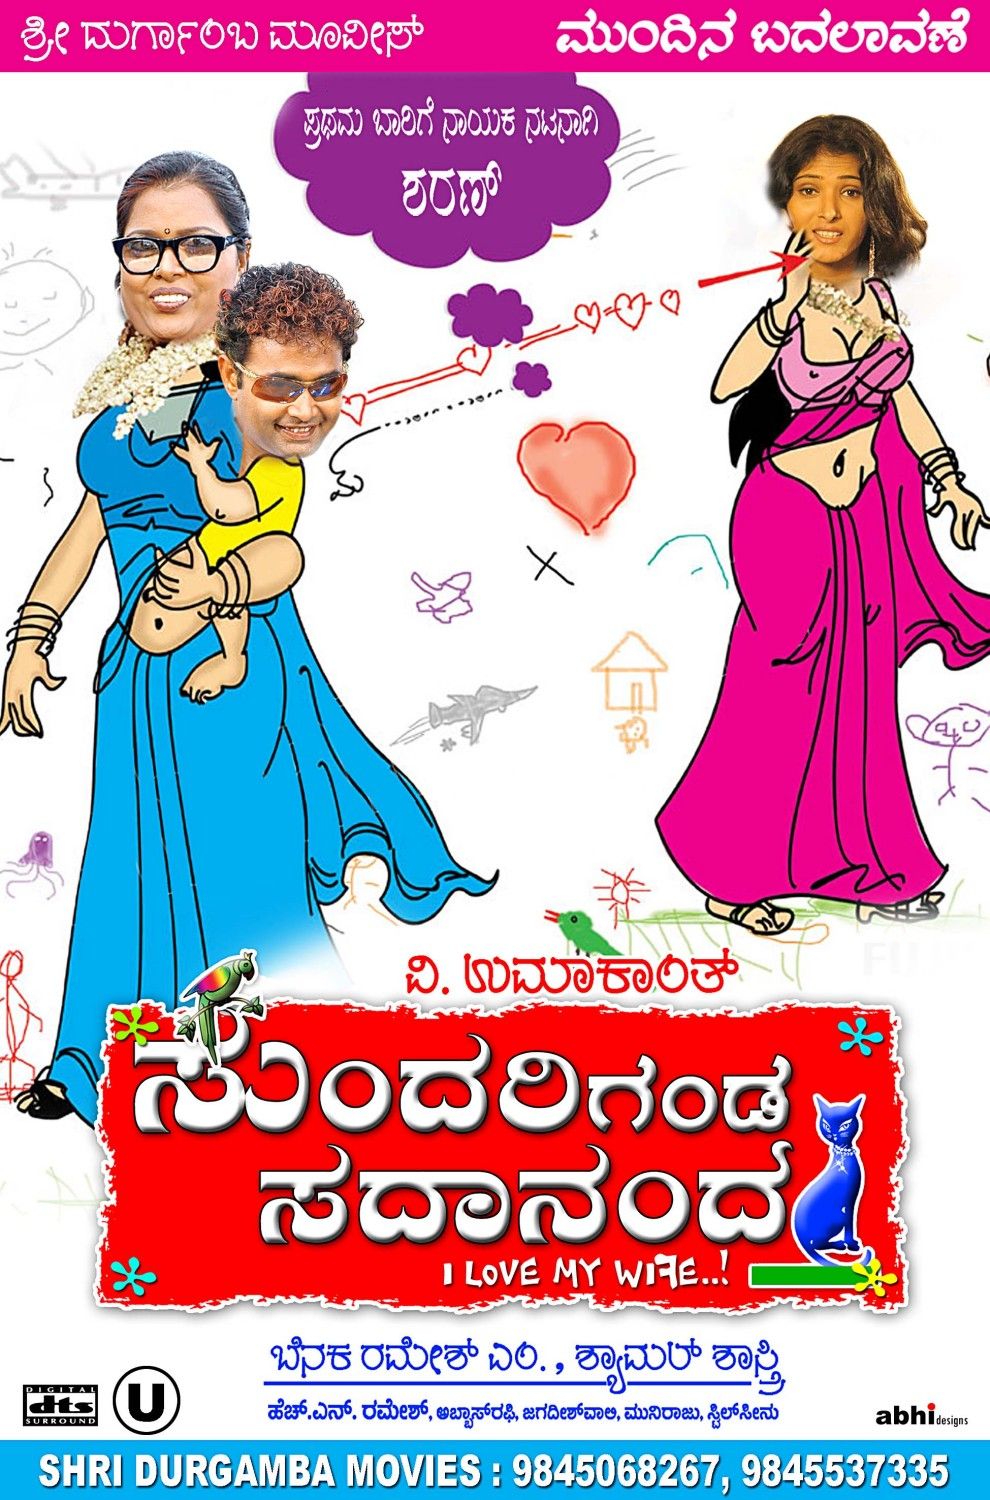 Extra Large Movie Poster Image for Sundari Ganda Sadananda (#5 of 5)